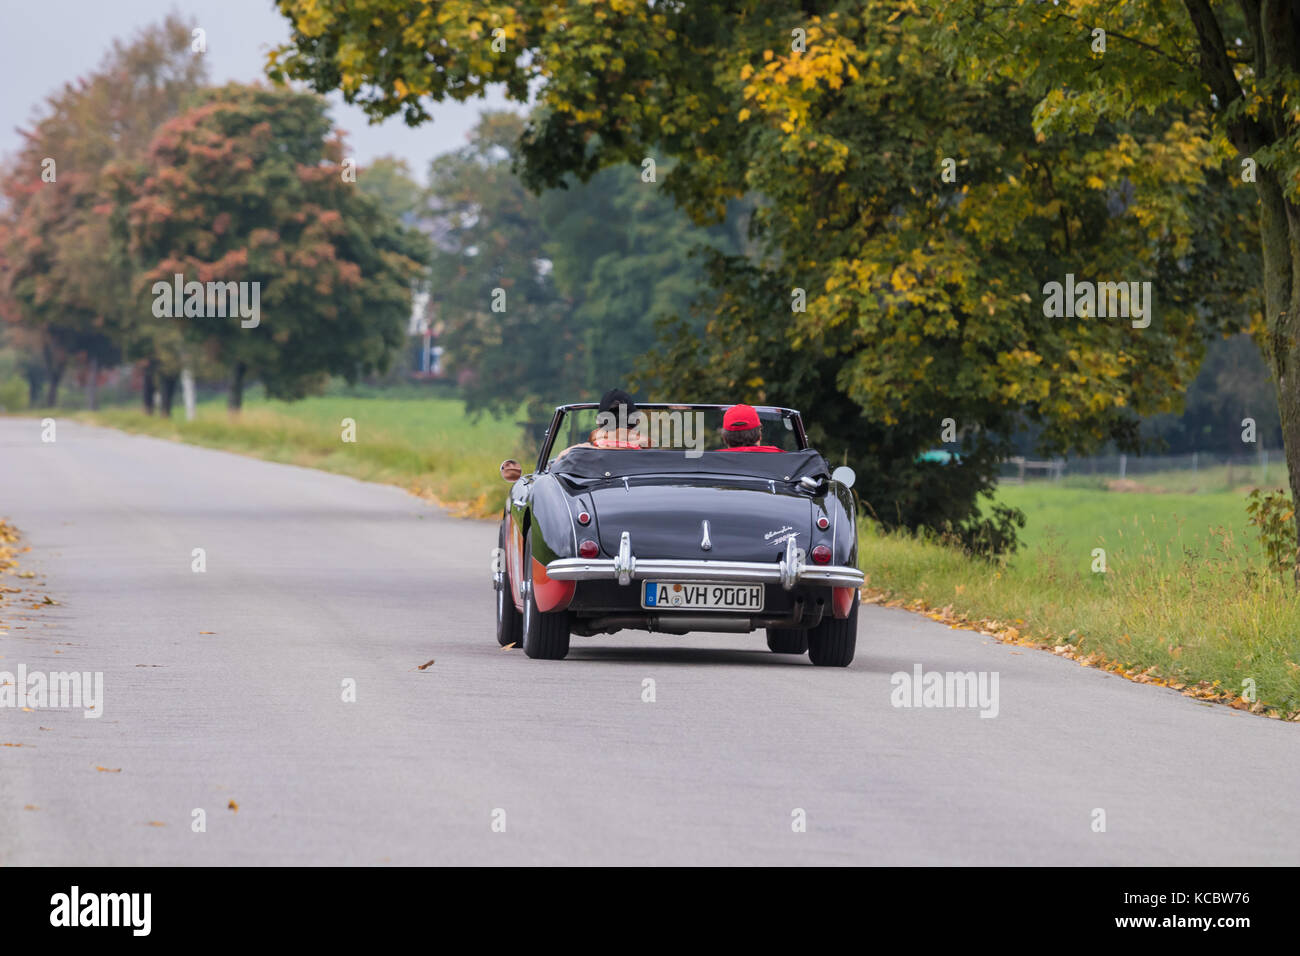 Augsburg, Deutschland - Oktober 1, 2017: 1964 Austin Healey 3000 Mk III oldtimer Auto an der fuggerstadt Classic 2017 Oldtimer Rallye am 1. Oktober 2017 Stockfoto